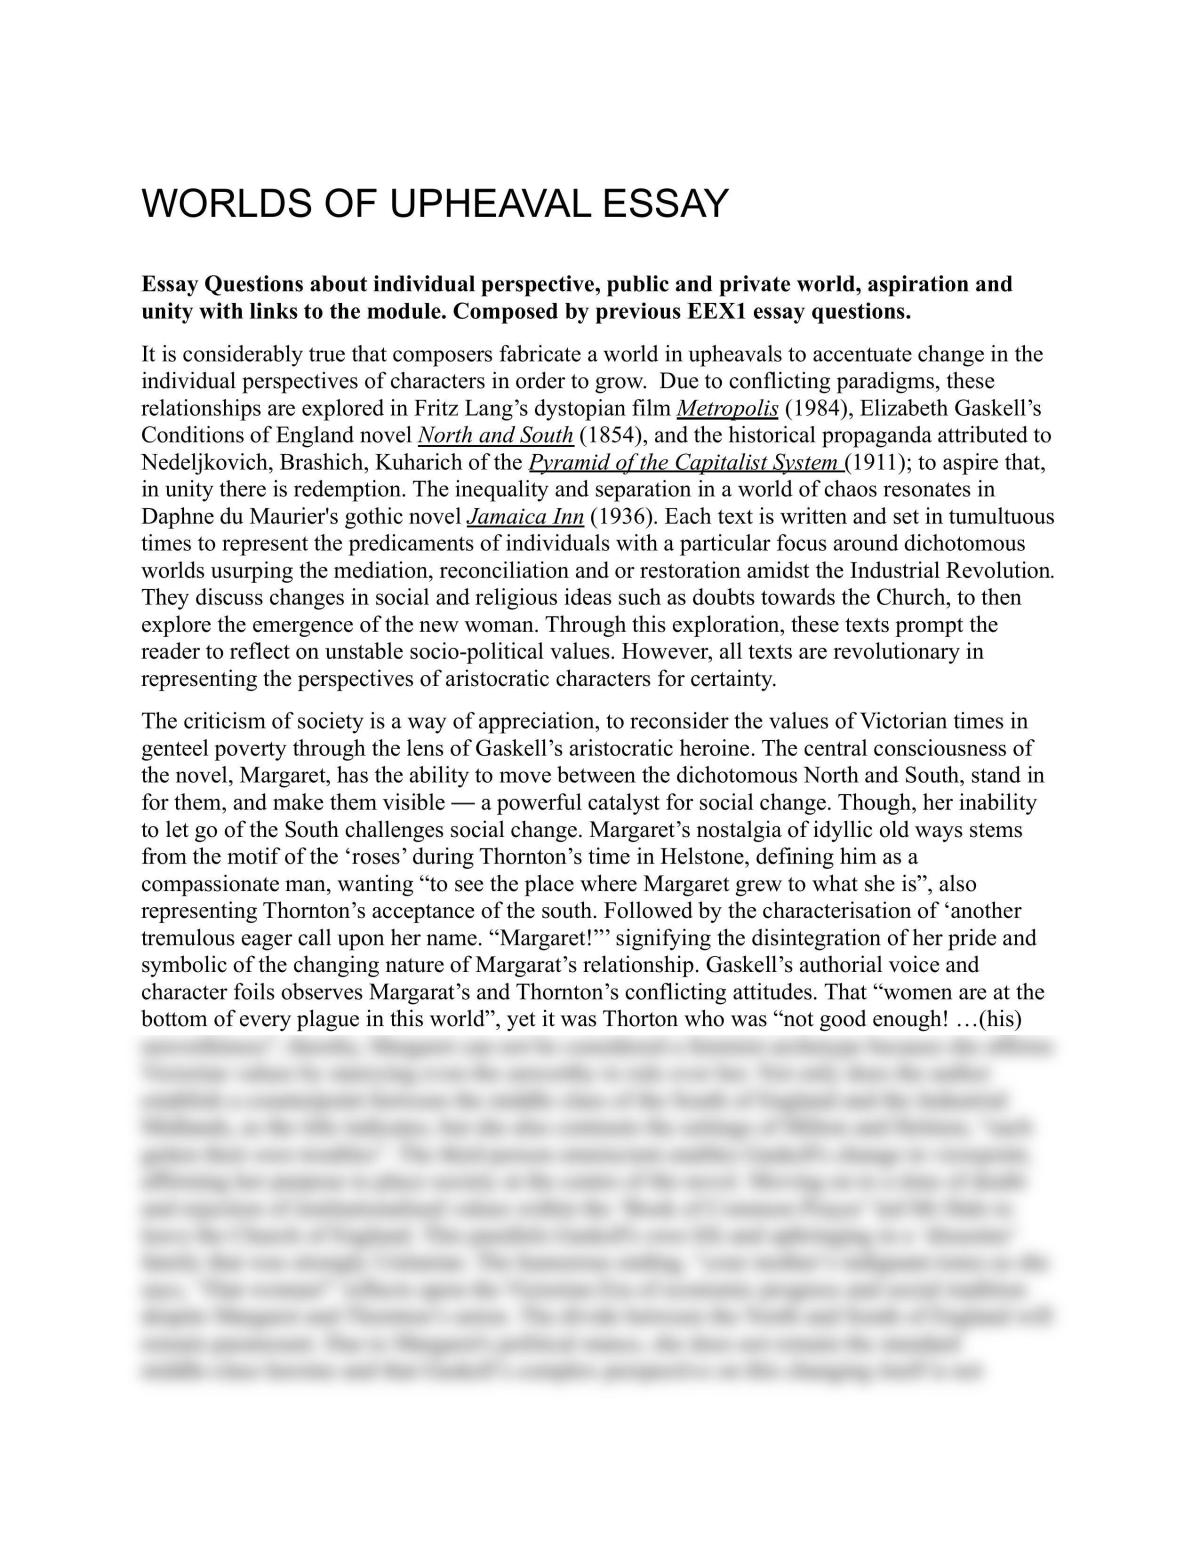 world of upheaval essay